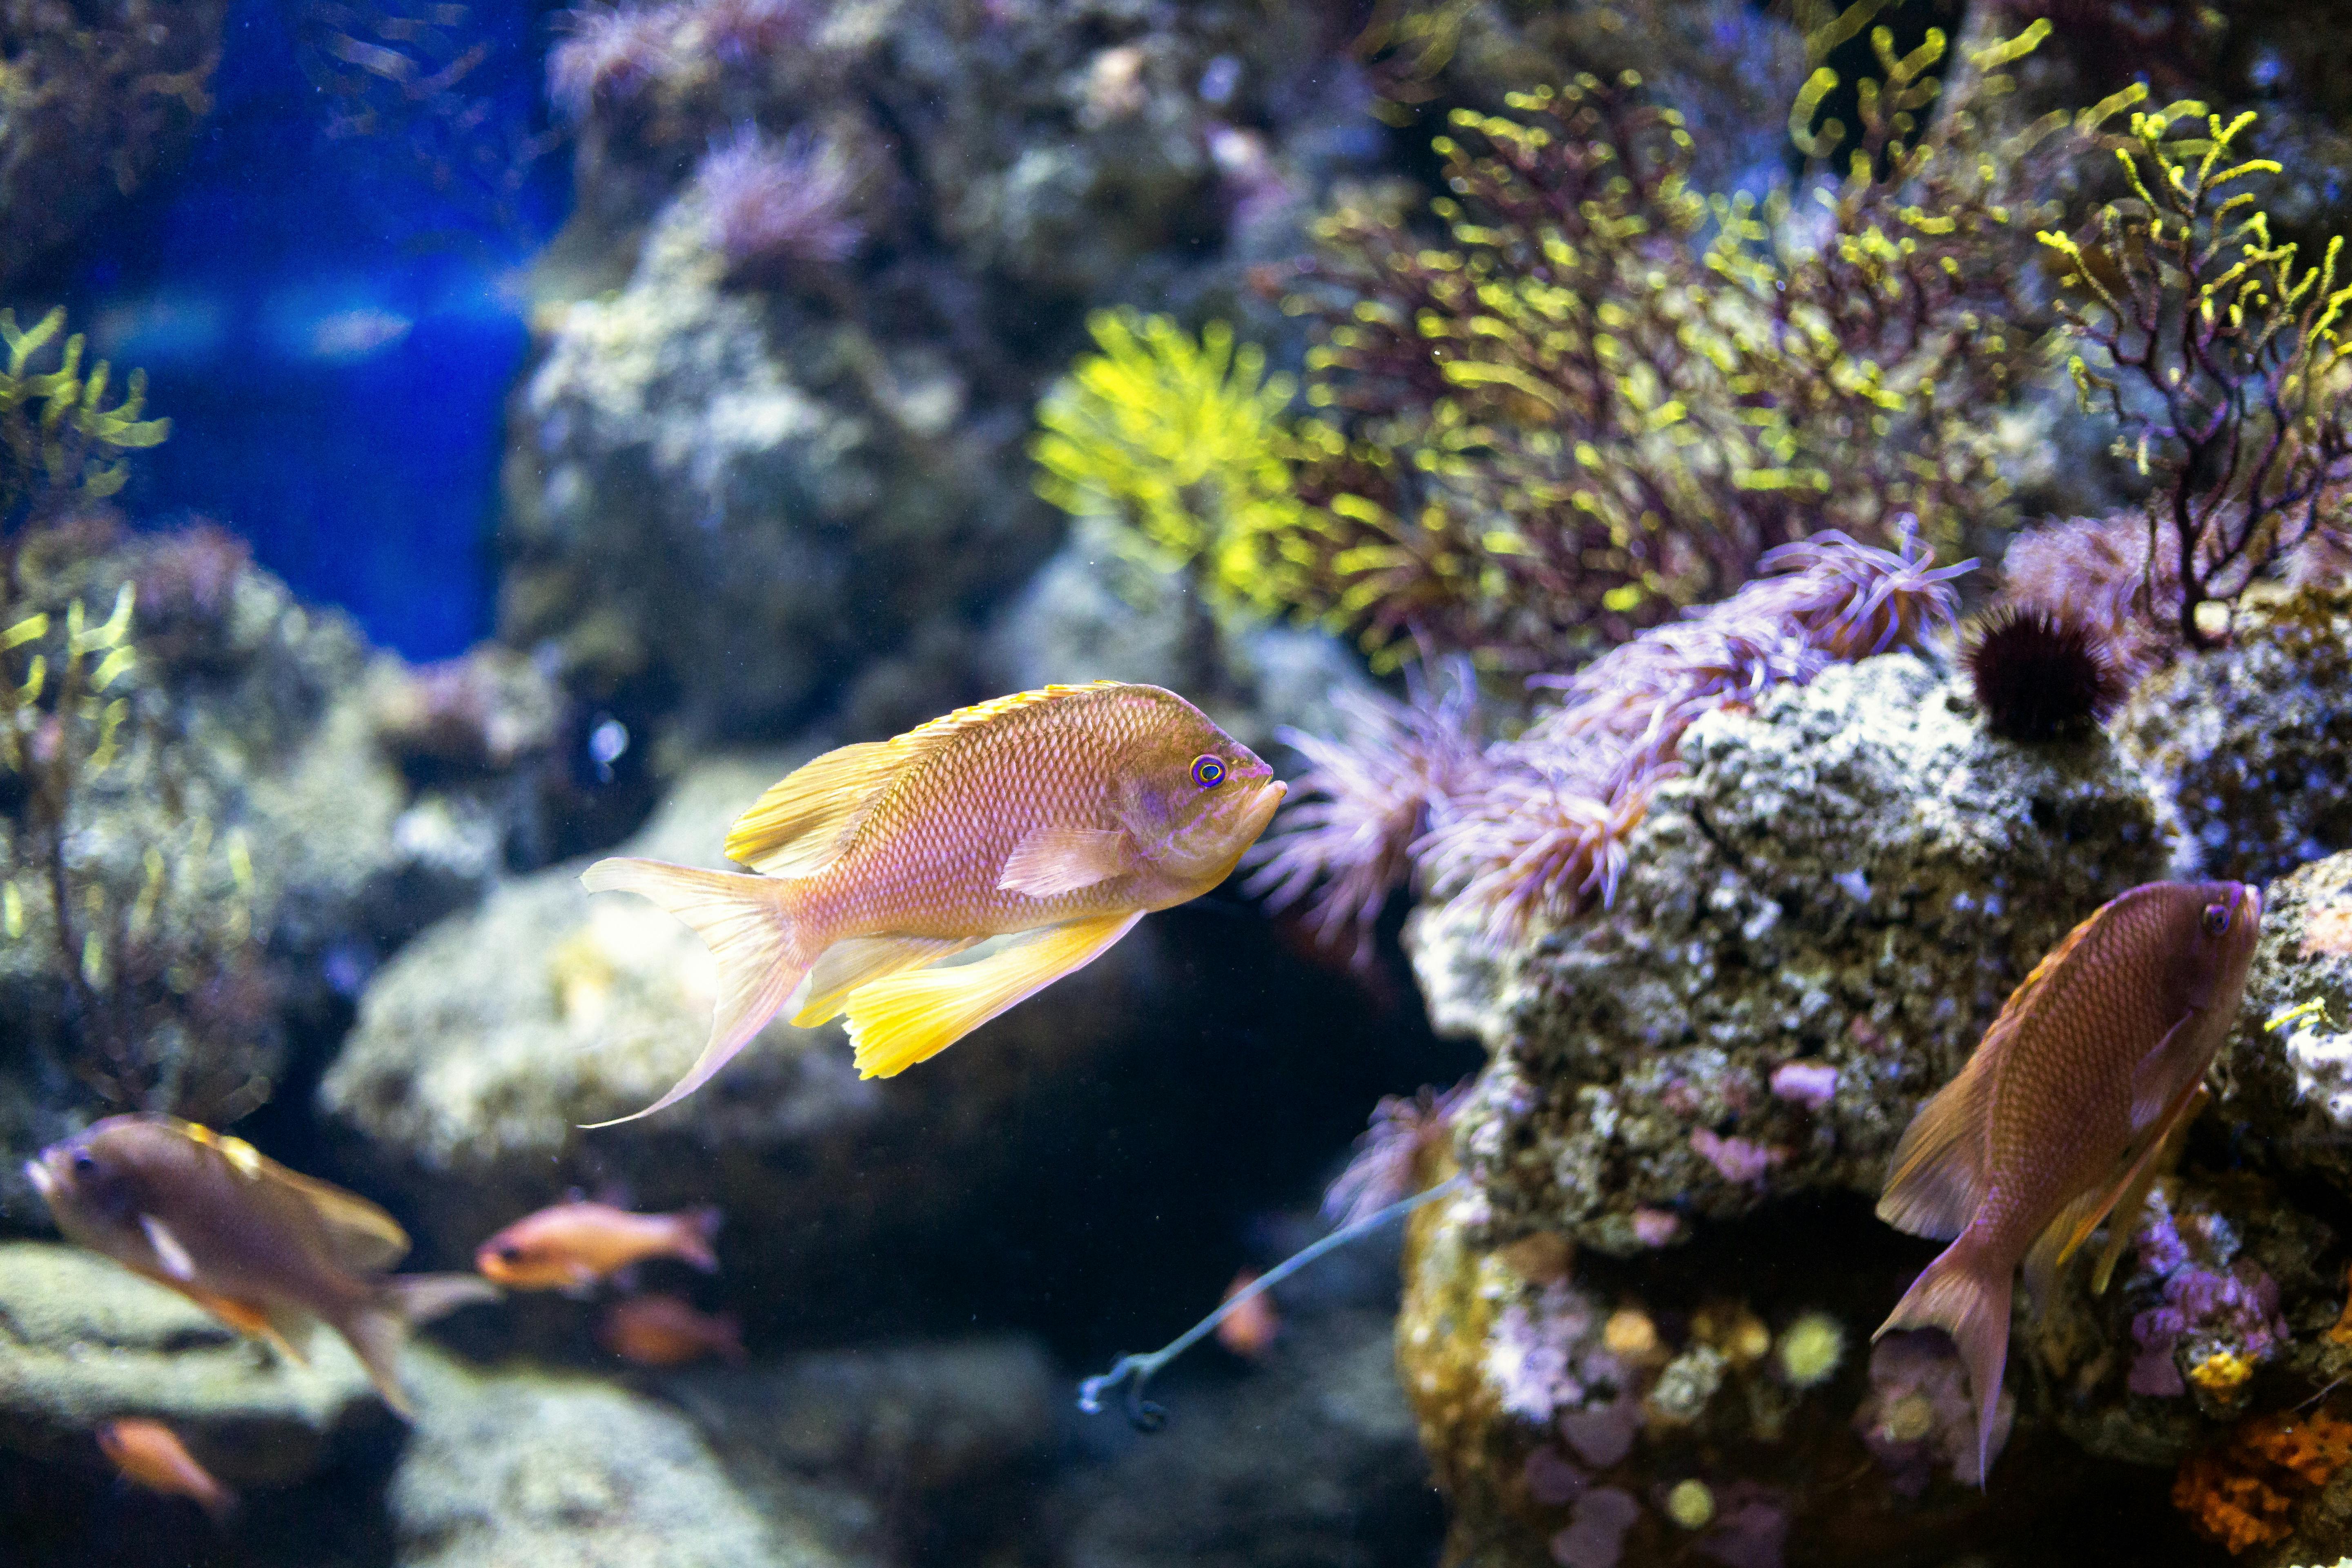 Sea Life aquarium in Benalmádena